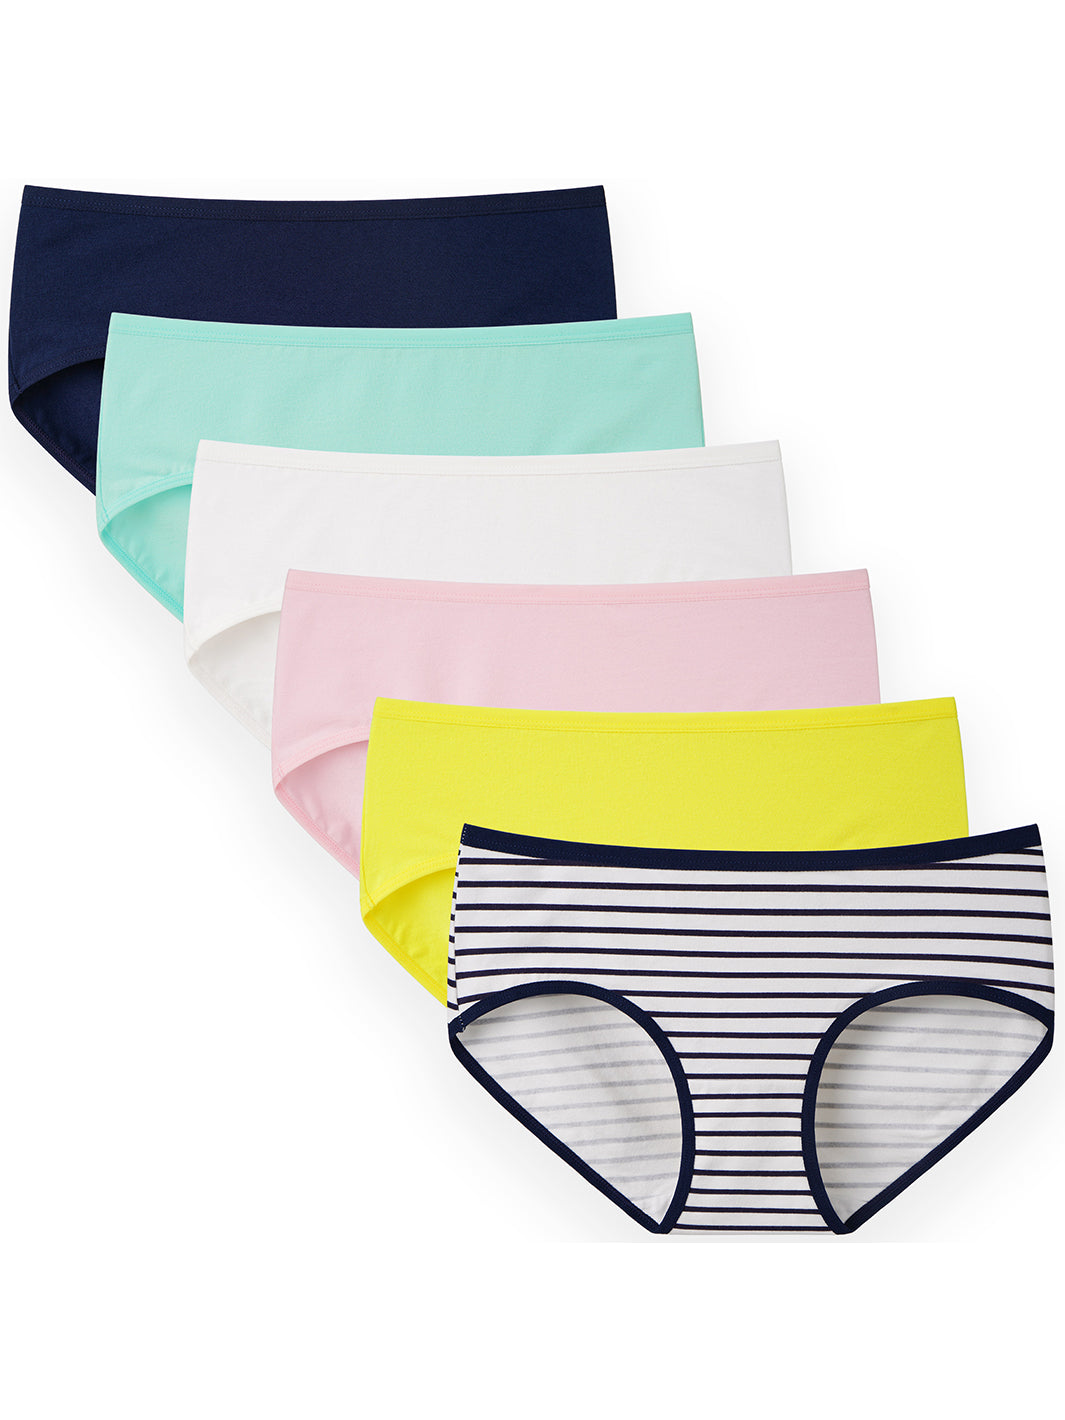 INNERSY Girls Cotton Underwear Teen Comfortable Panties Size 8-16 Briefs 6  Pack